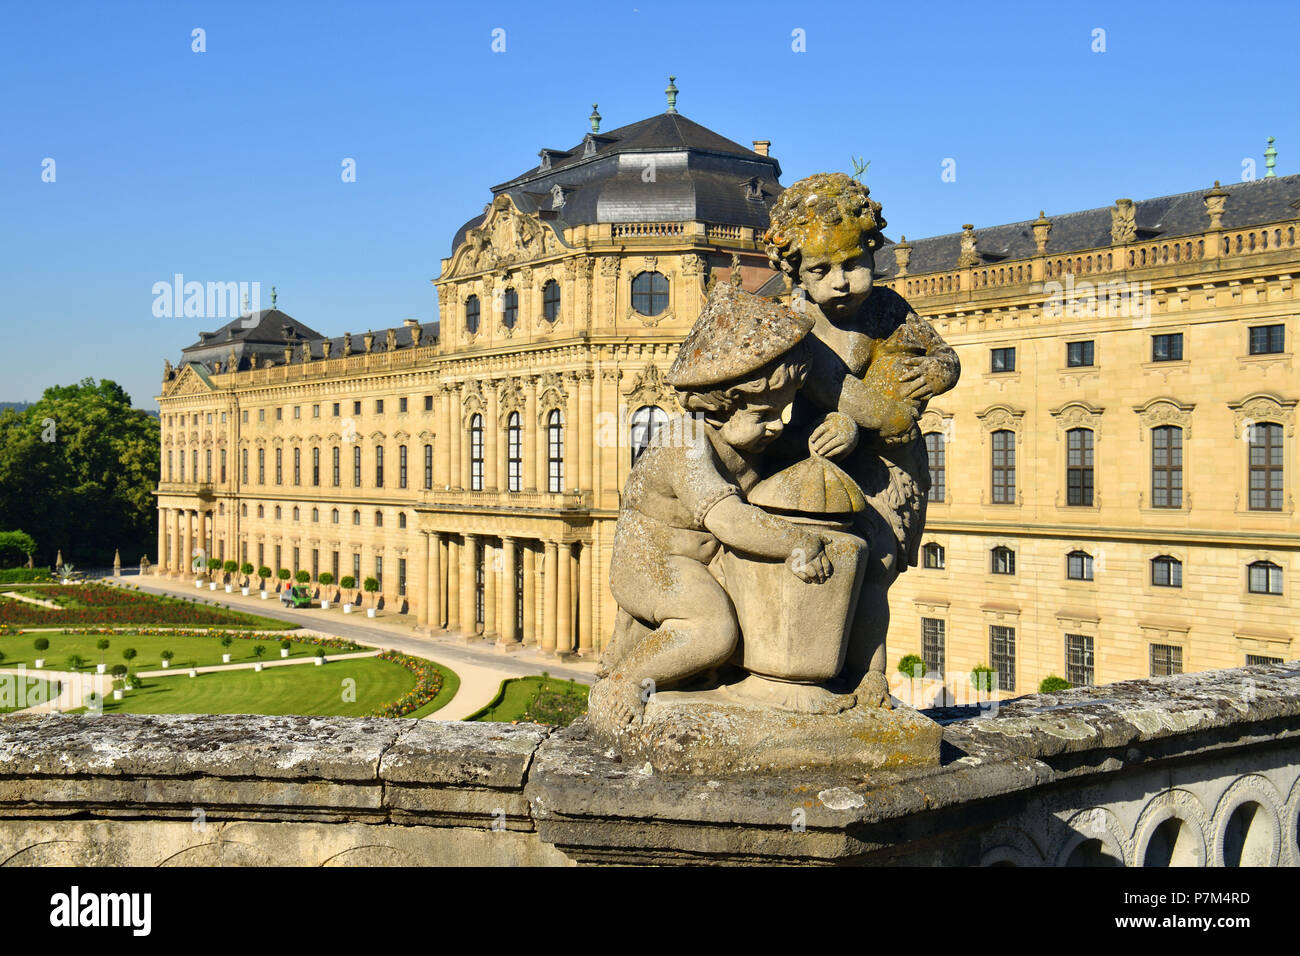 Germany, Bavaria, Upper Franconia Region, Würzburg, Würzburg residence of the eighteenth century (Residenz), baroque style, listed as World Heritage by UNESCO, Hofgarten (court garden) Stock Photo